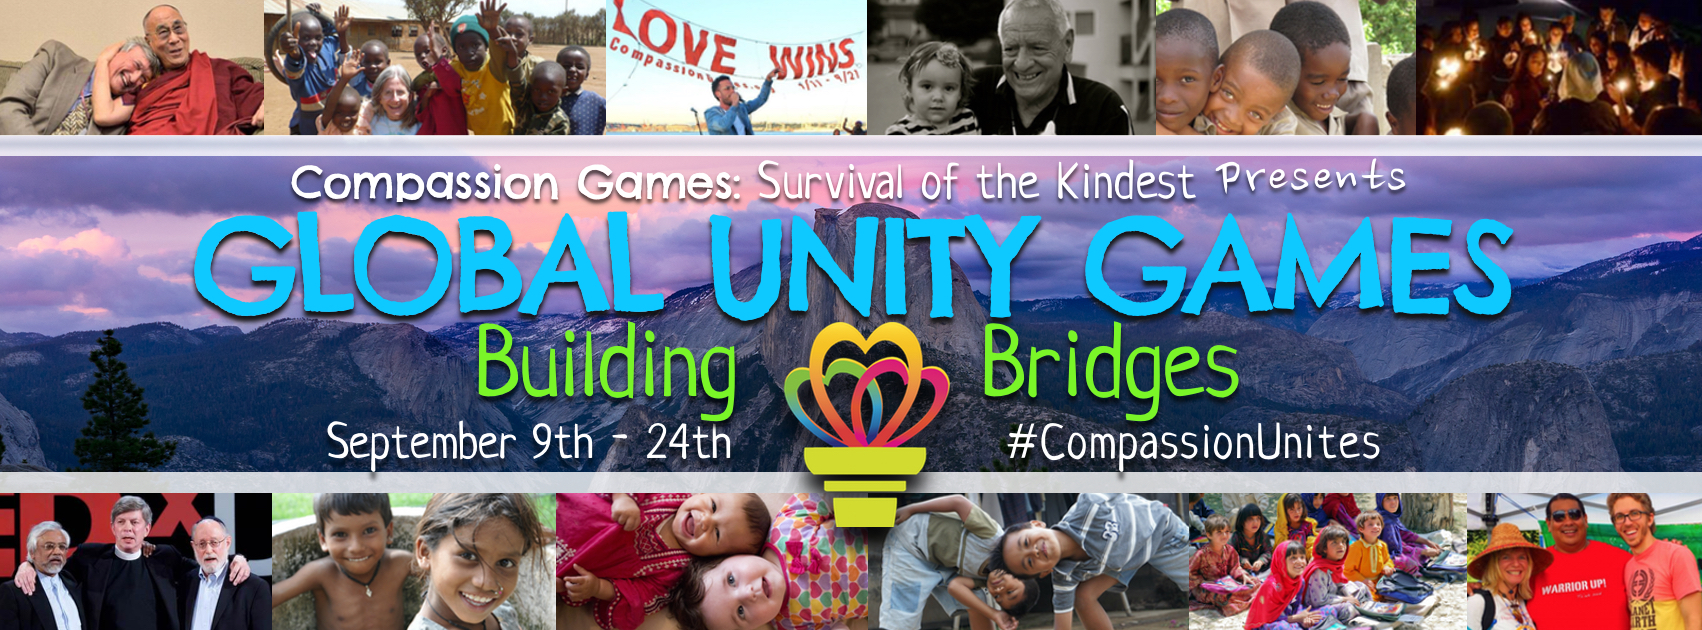 Compassion Games - Global Unity Games: Building Bridges Sept. 9-24